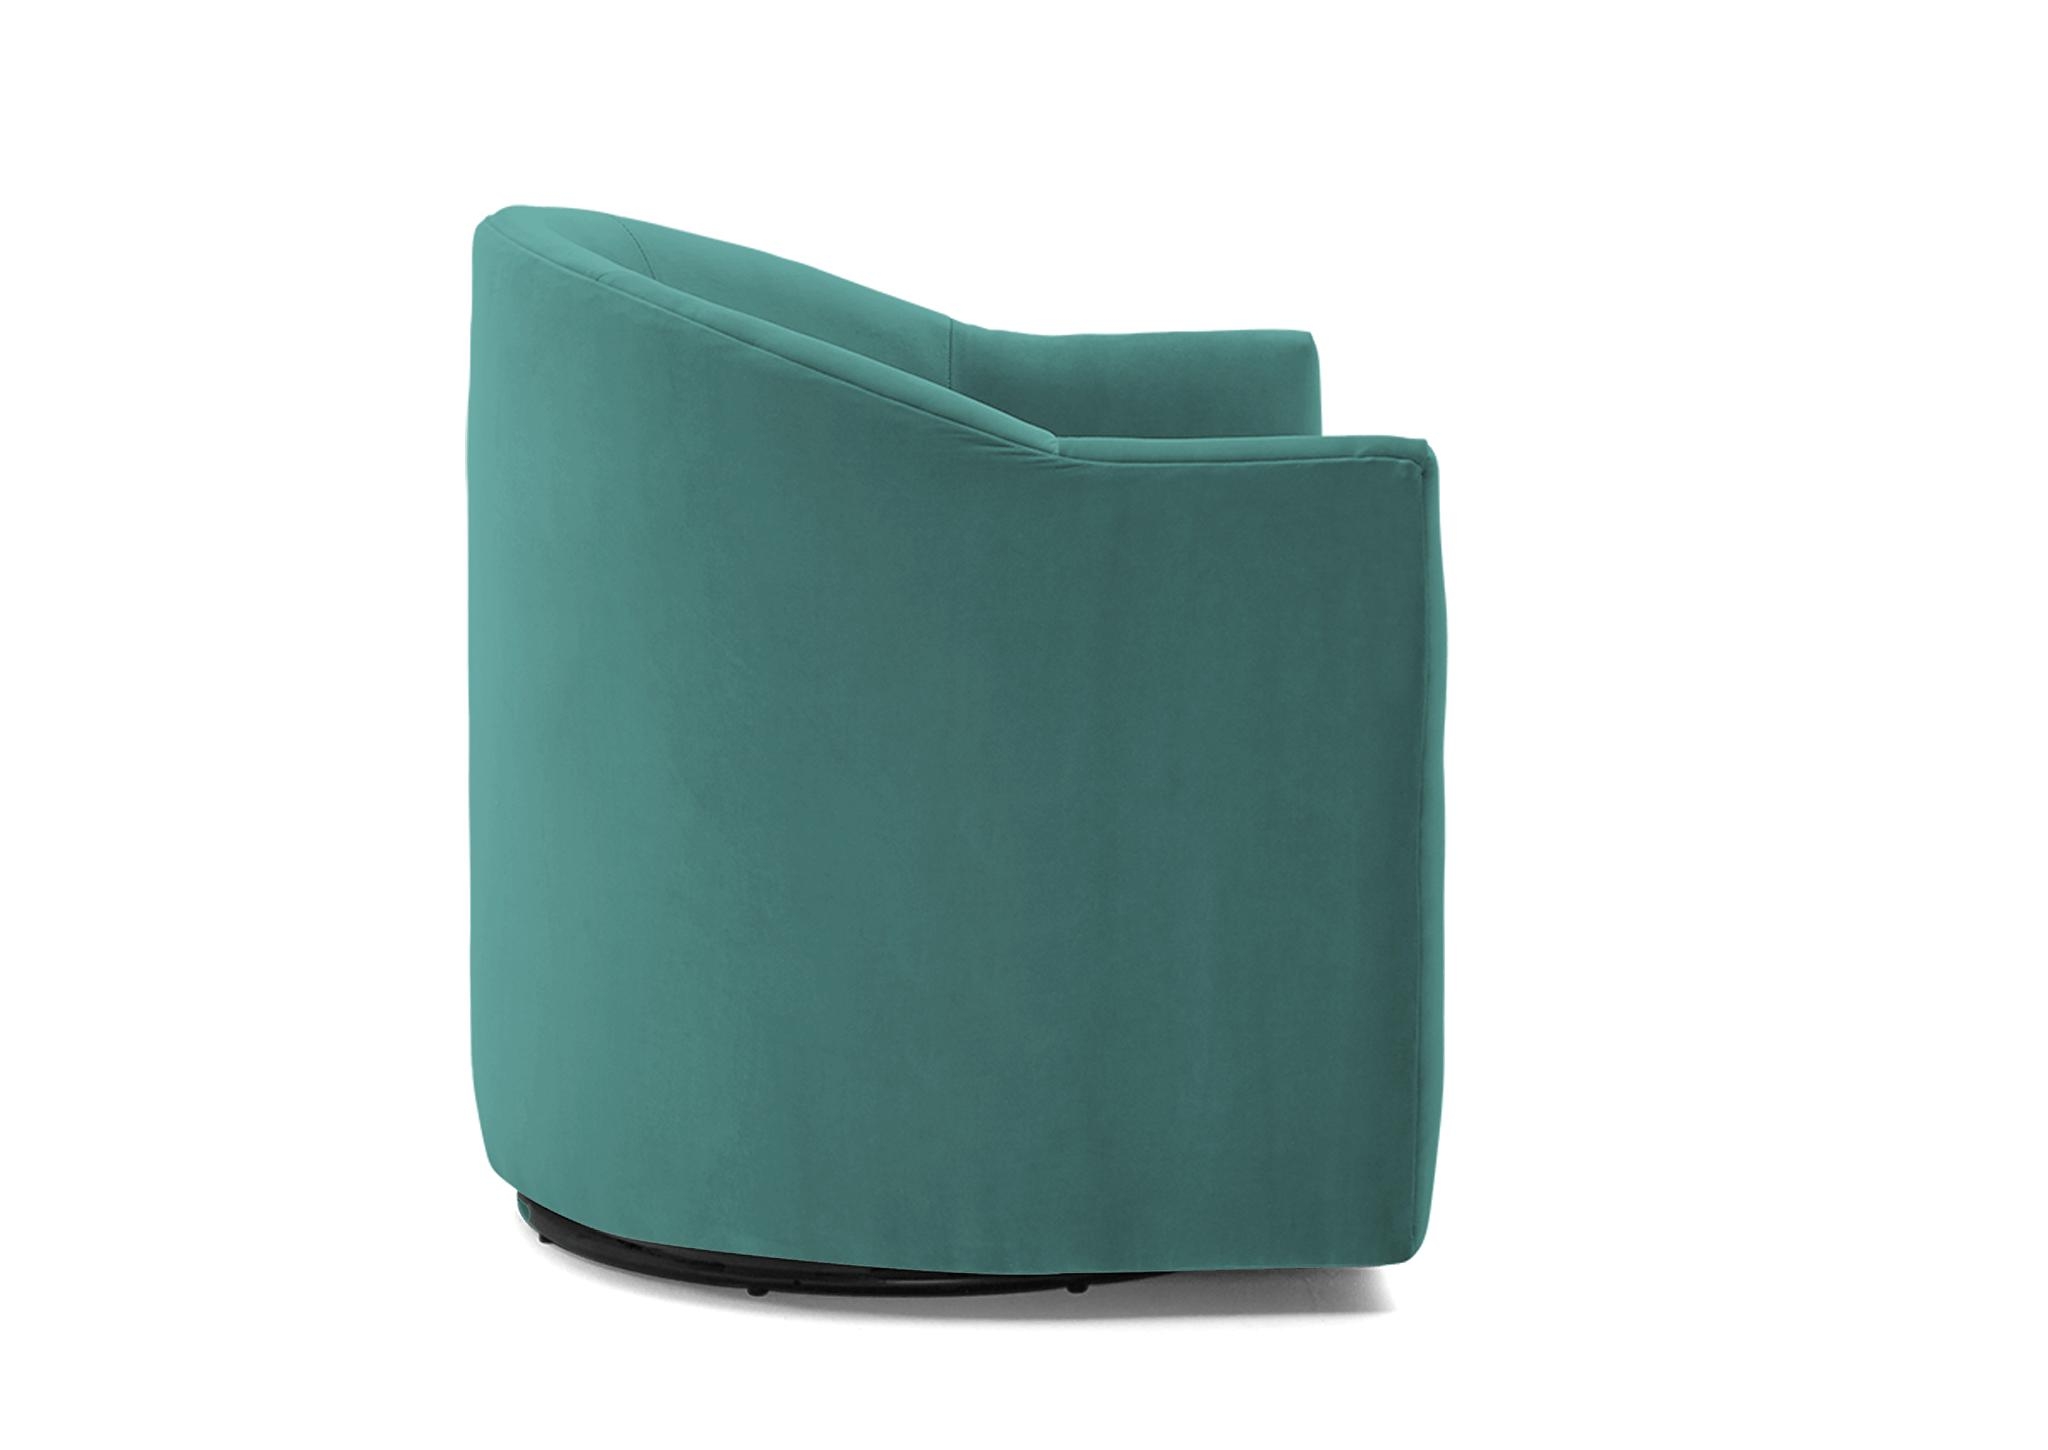 Green Jolie Mid Century Modern Swivel Chair - Essence Aqua - Image 2